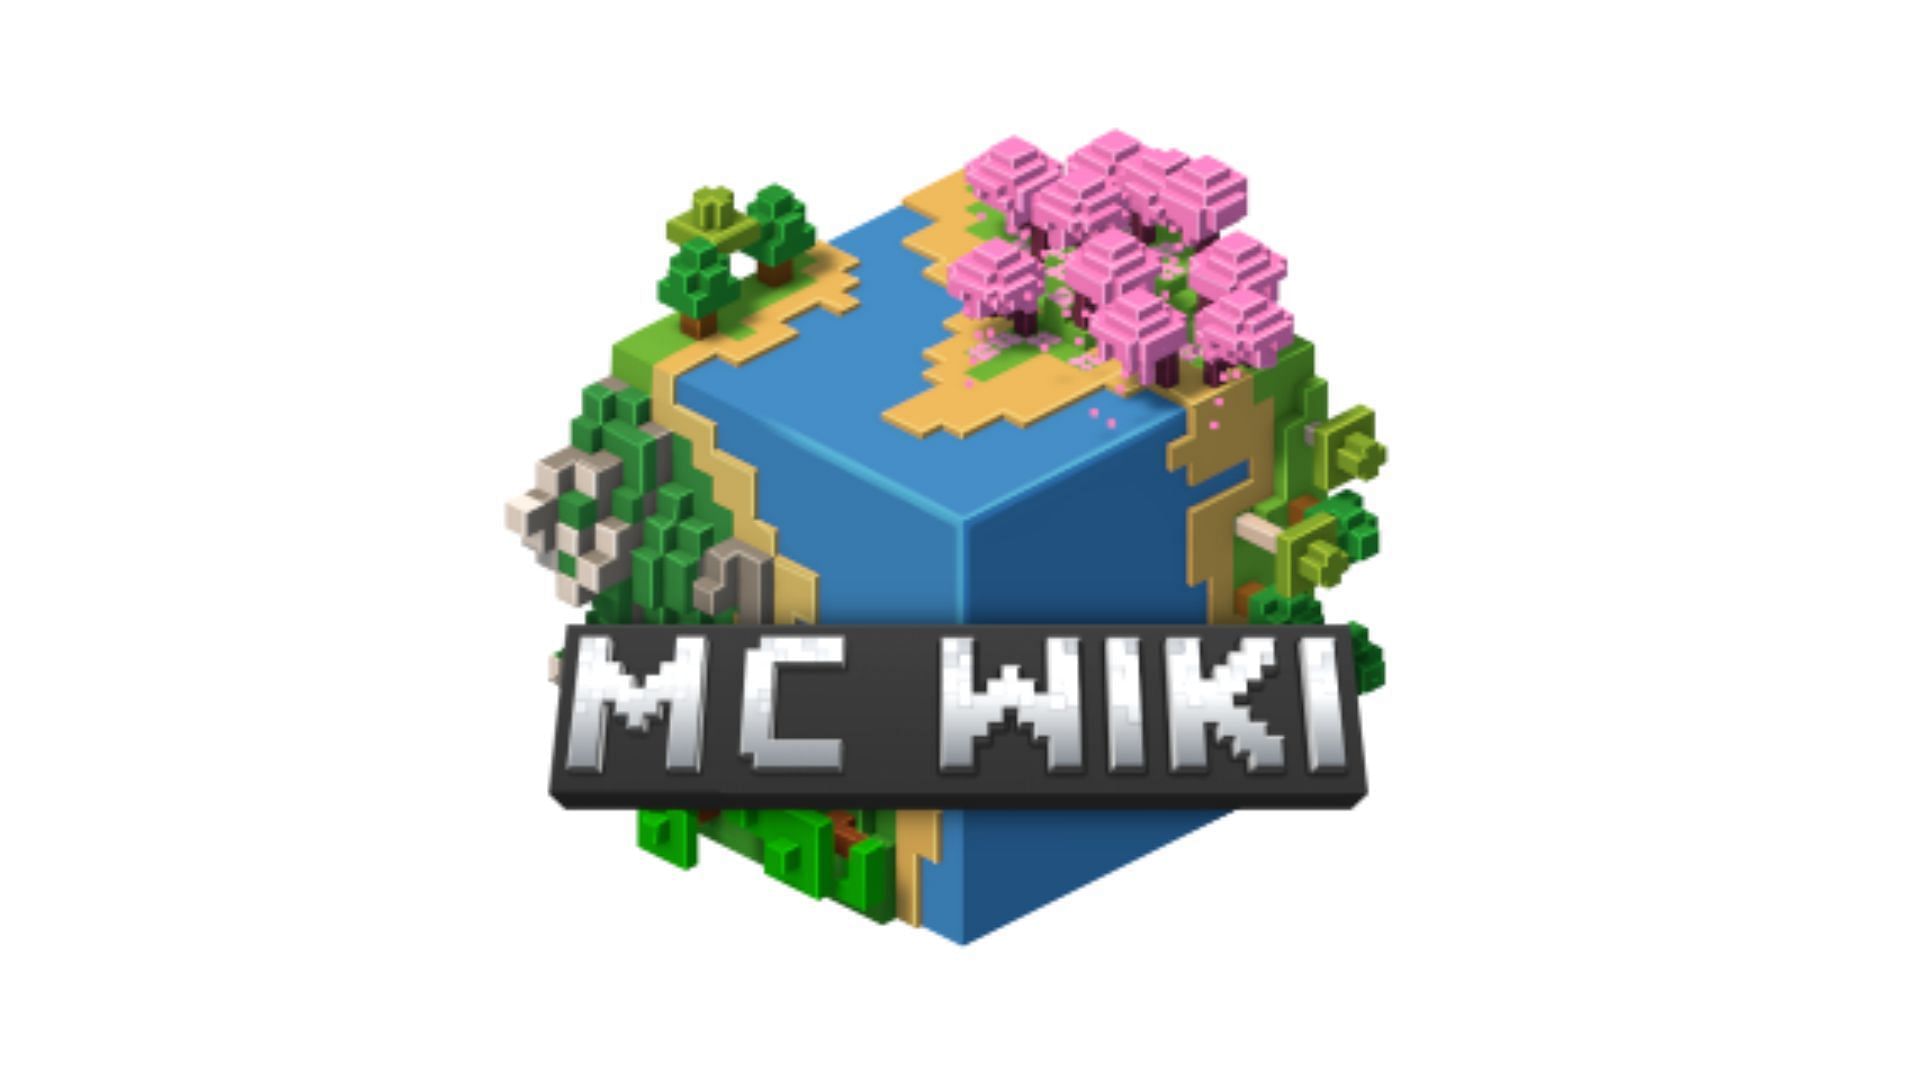 New Minecraft wiki (minecraft.fandom.com) vs Old wiki (minecraft